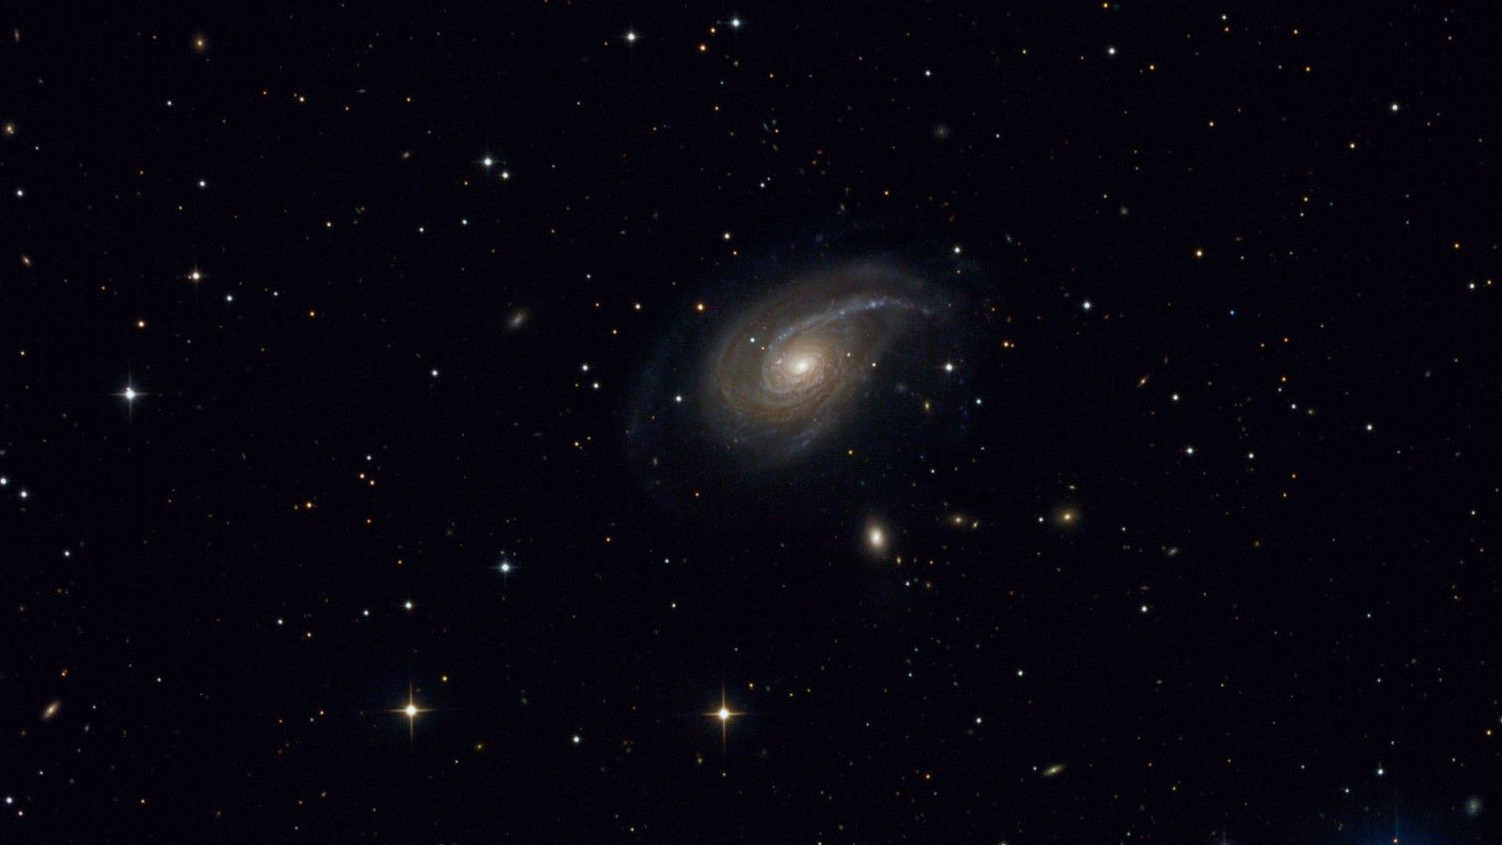 The spiral galaxy NGC 772